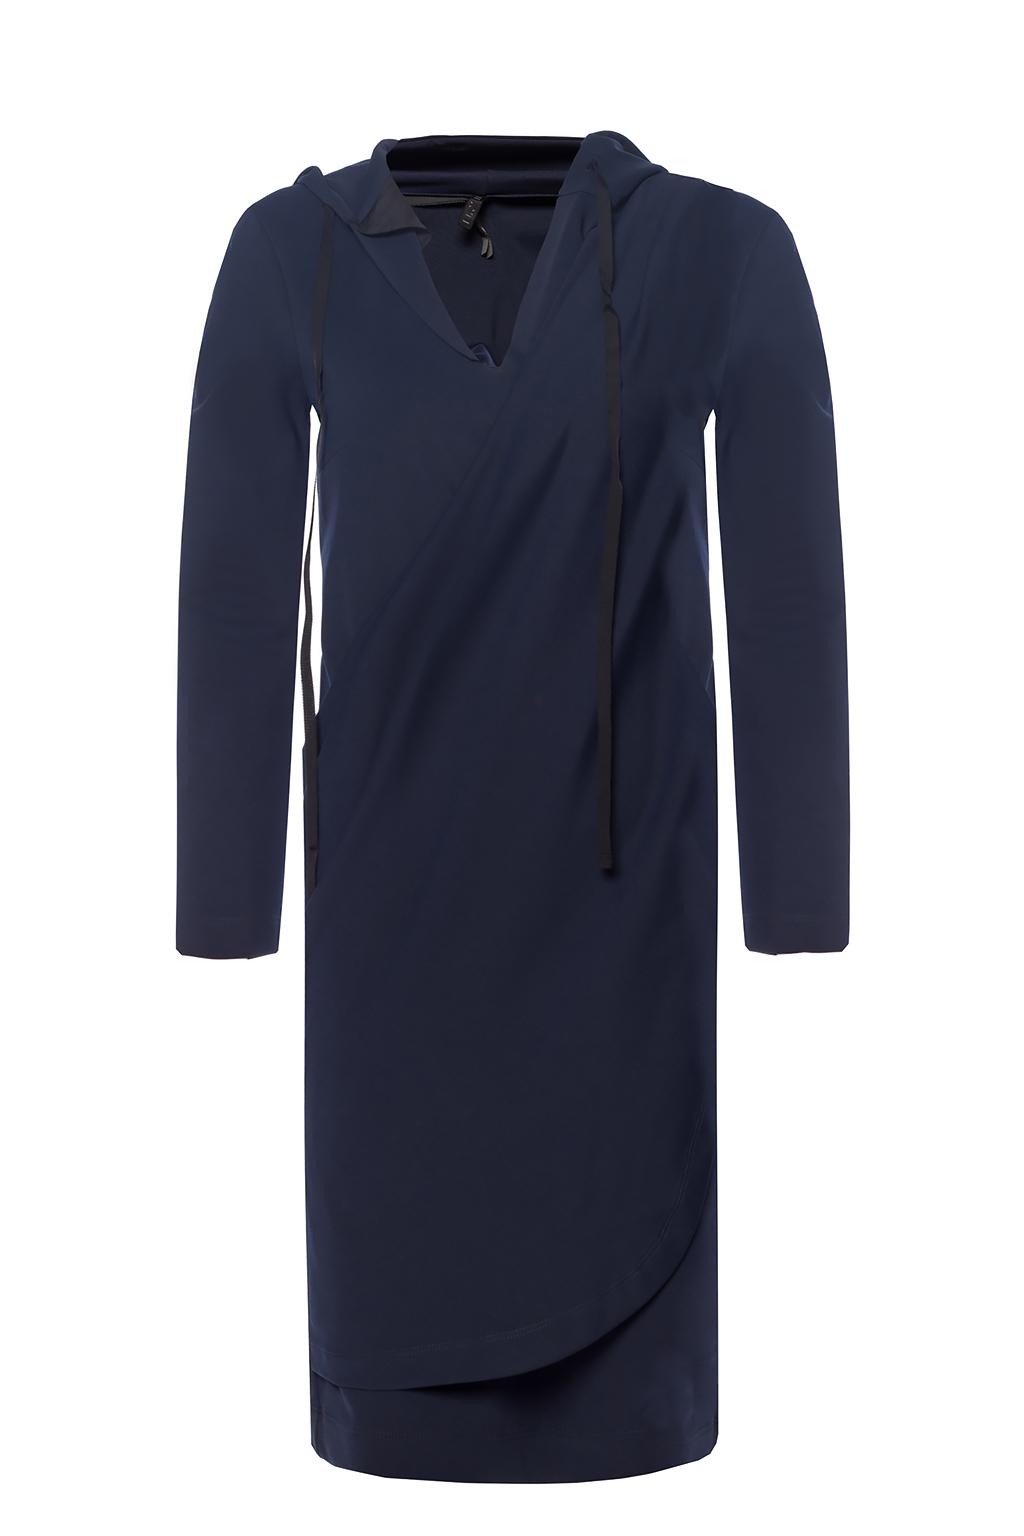 Navy blue Hooded dress Unravel Project - Vitkac GB